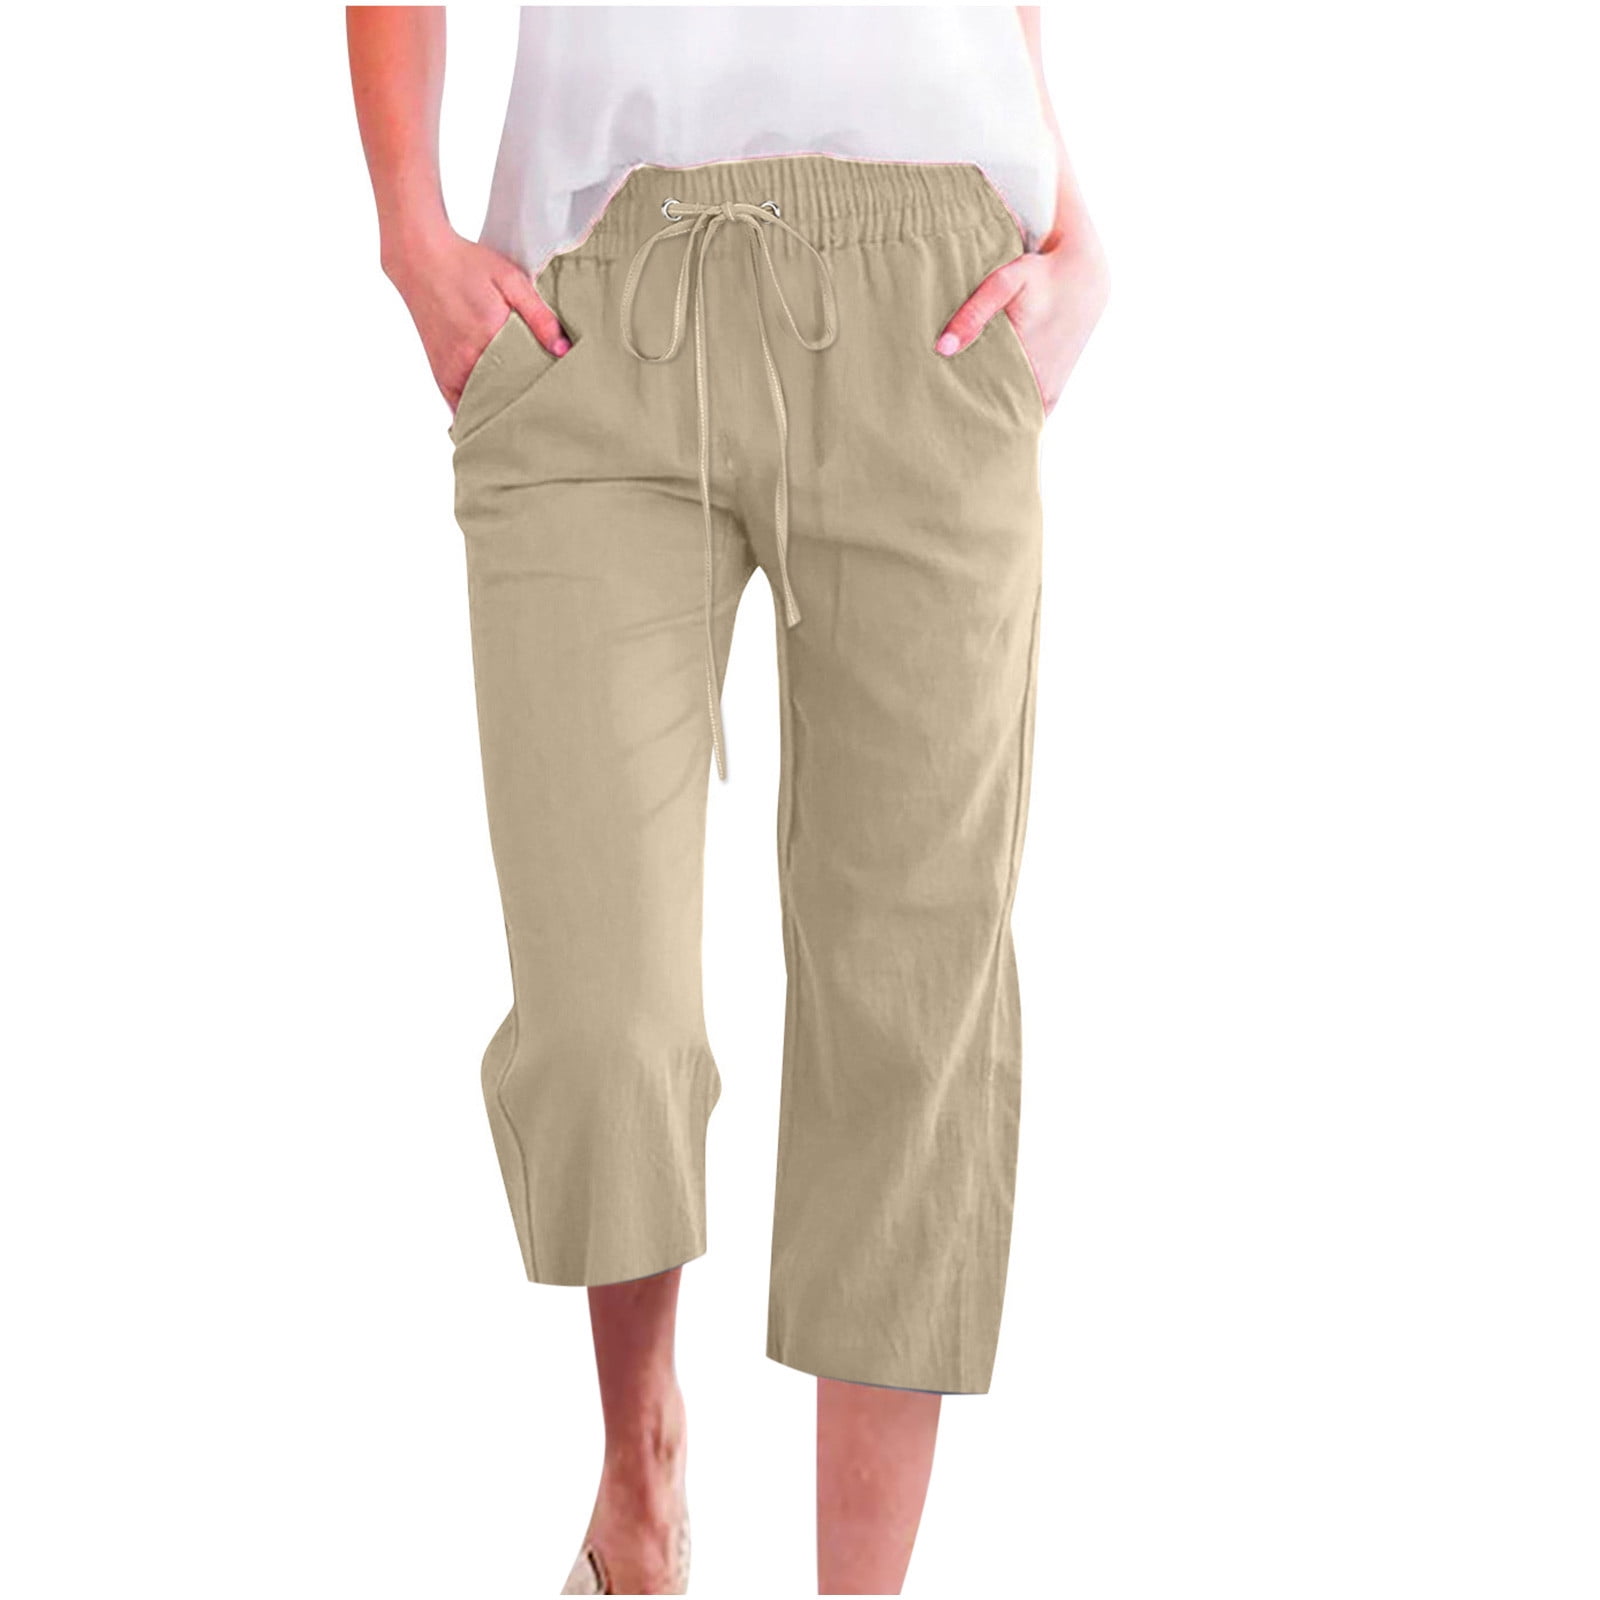 Womens Capris Cotton Linen Cropped Pants Drawstring Elastic High